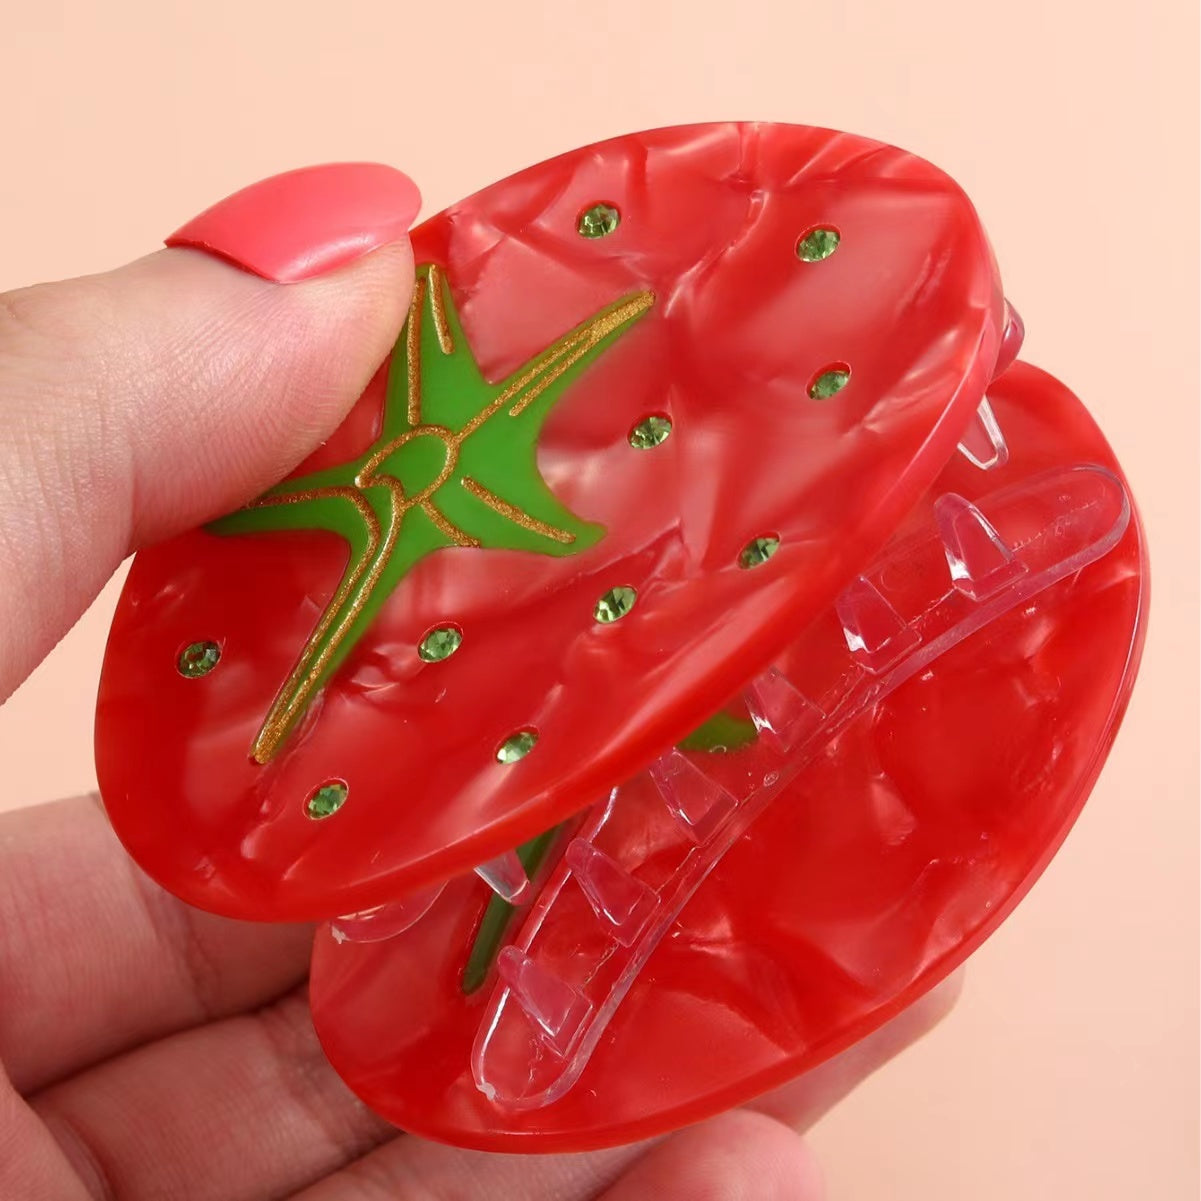 (New Version) Tomato claw within diamonds